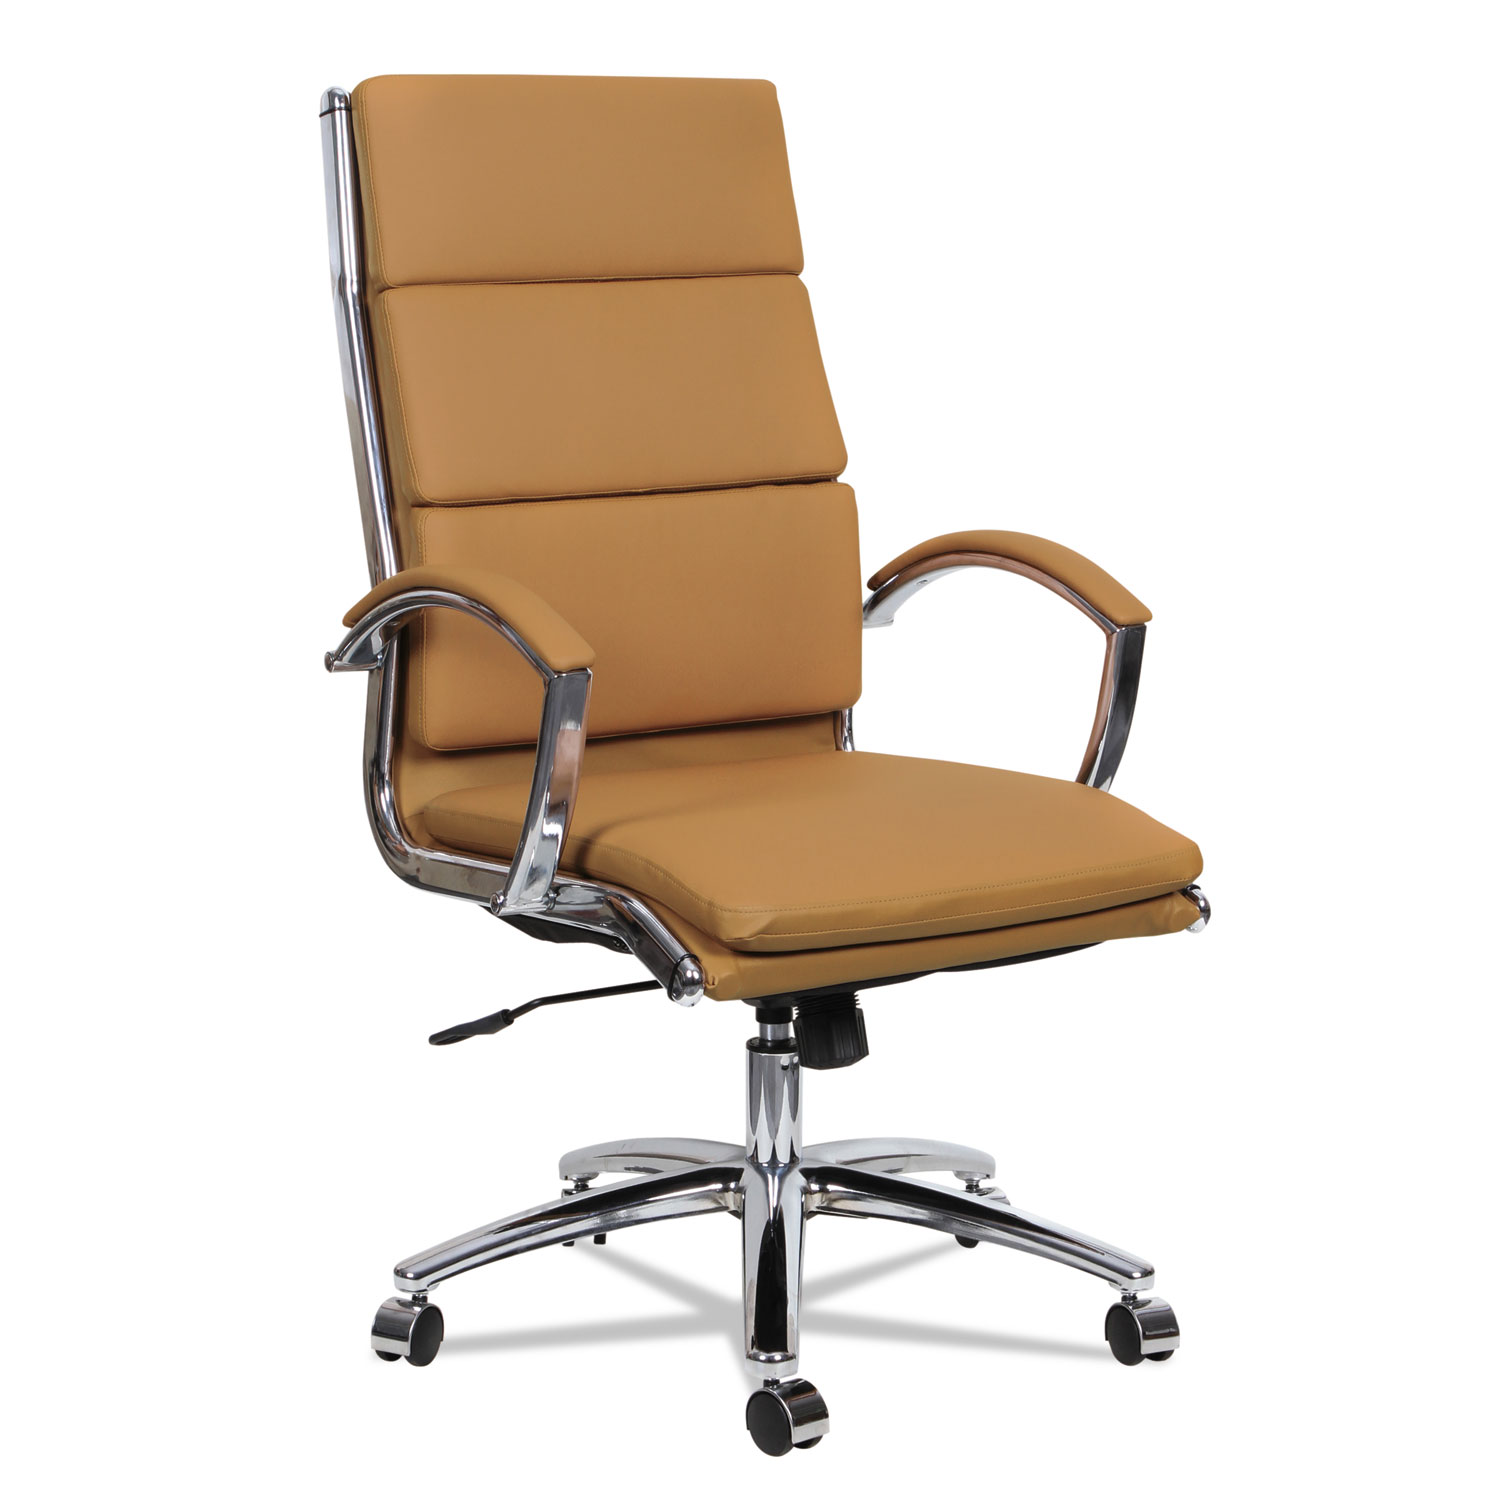 Alera Neratoli High-Back Slim Profile Chair, Camel Soft Leather, Chrome Frame